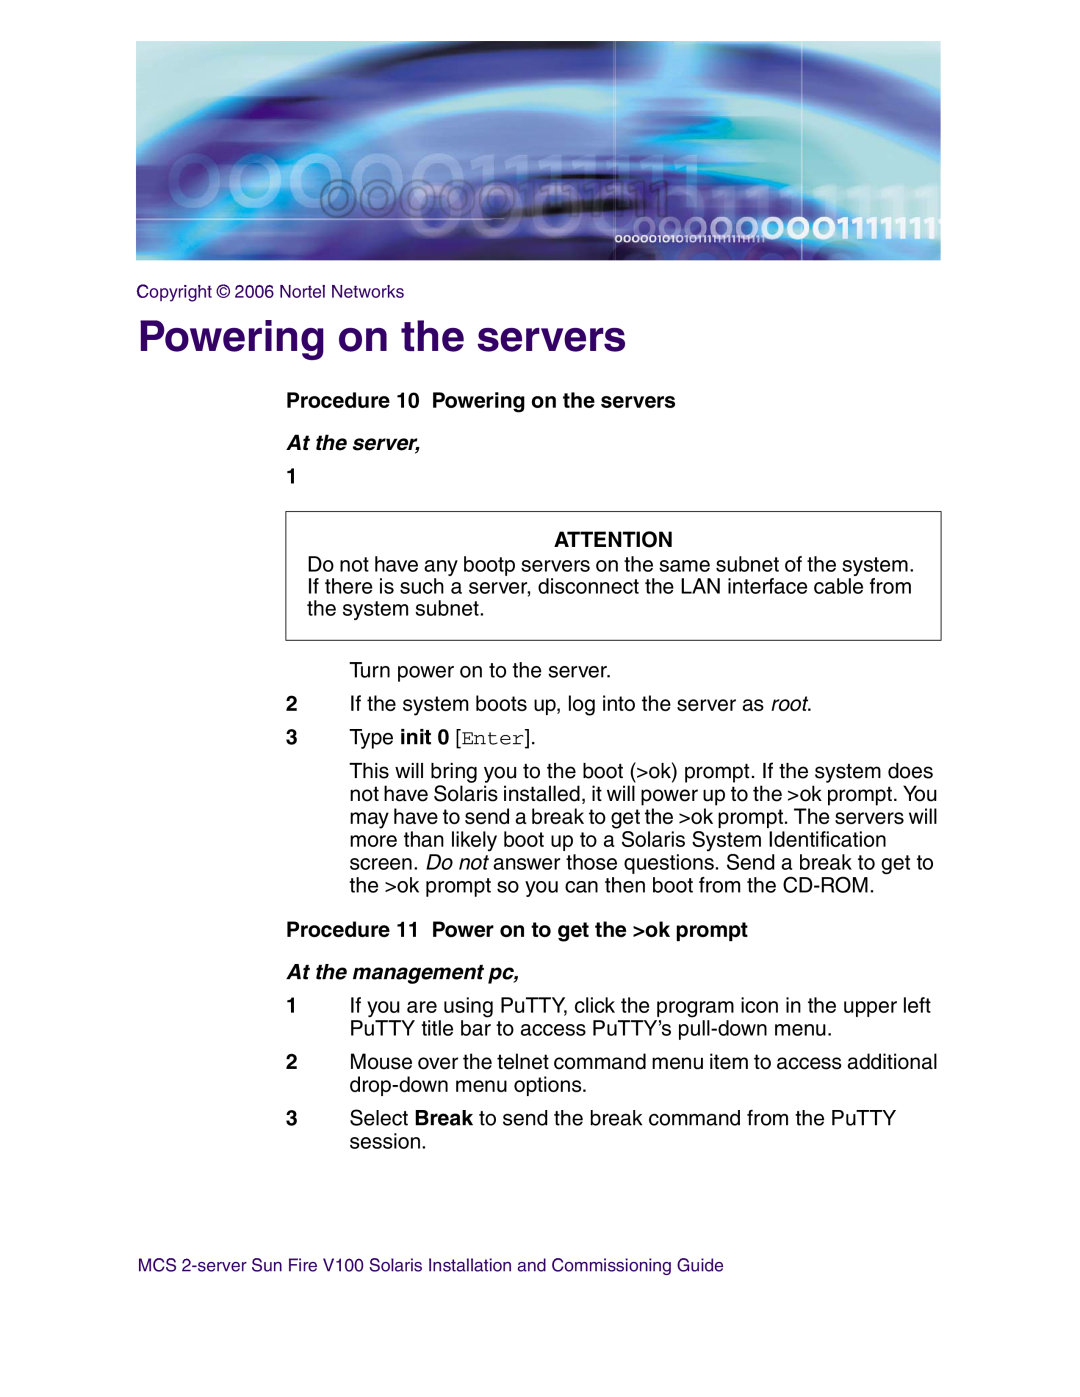 Nortel Networks V100 Procedure 10 Powering on the servers, At the server, Procedure 11 Power on to get the ok prompt 